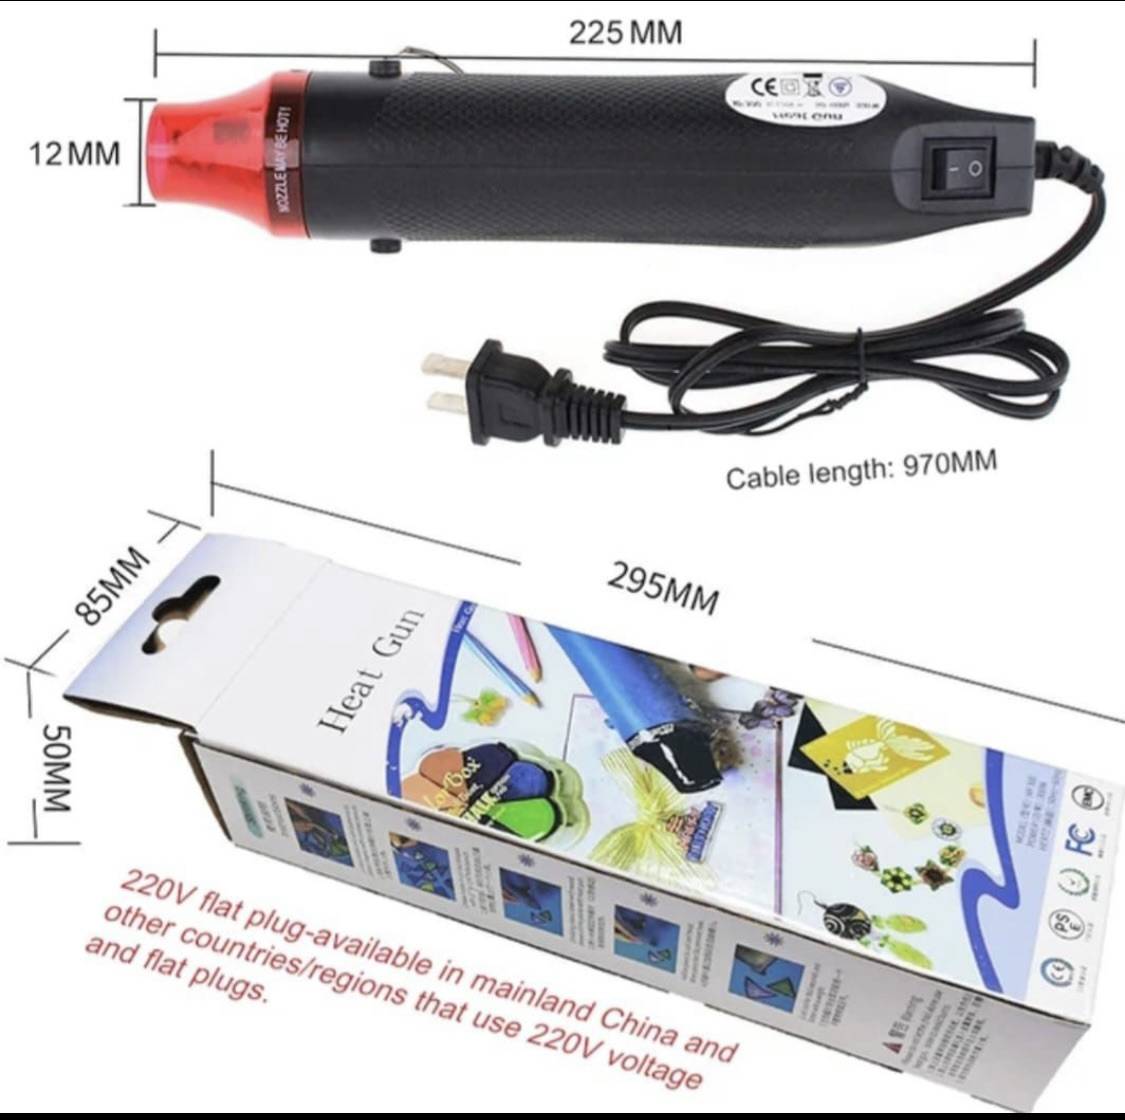 Multi-Purpose Professional Heat Gun Pen Tool Portable Mini Electric Heating  Nozzle Hot Air Gun for DIY Embossing Shrink Drying Paint Art (White/Black)